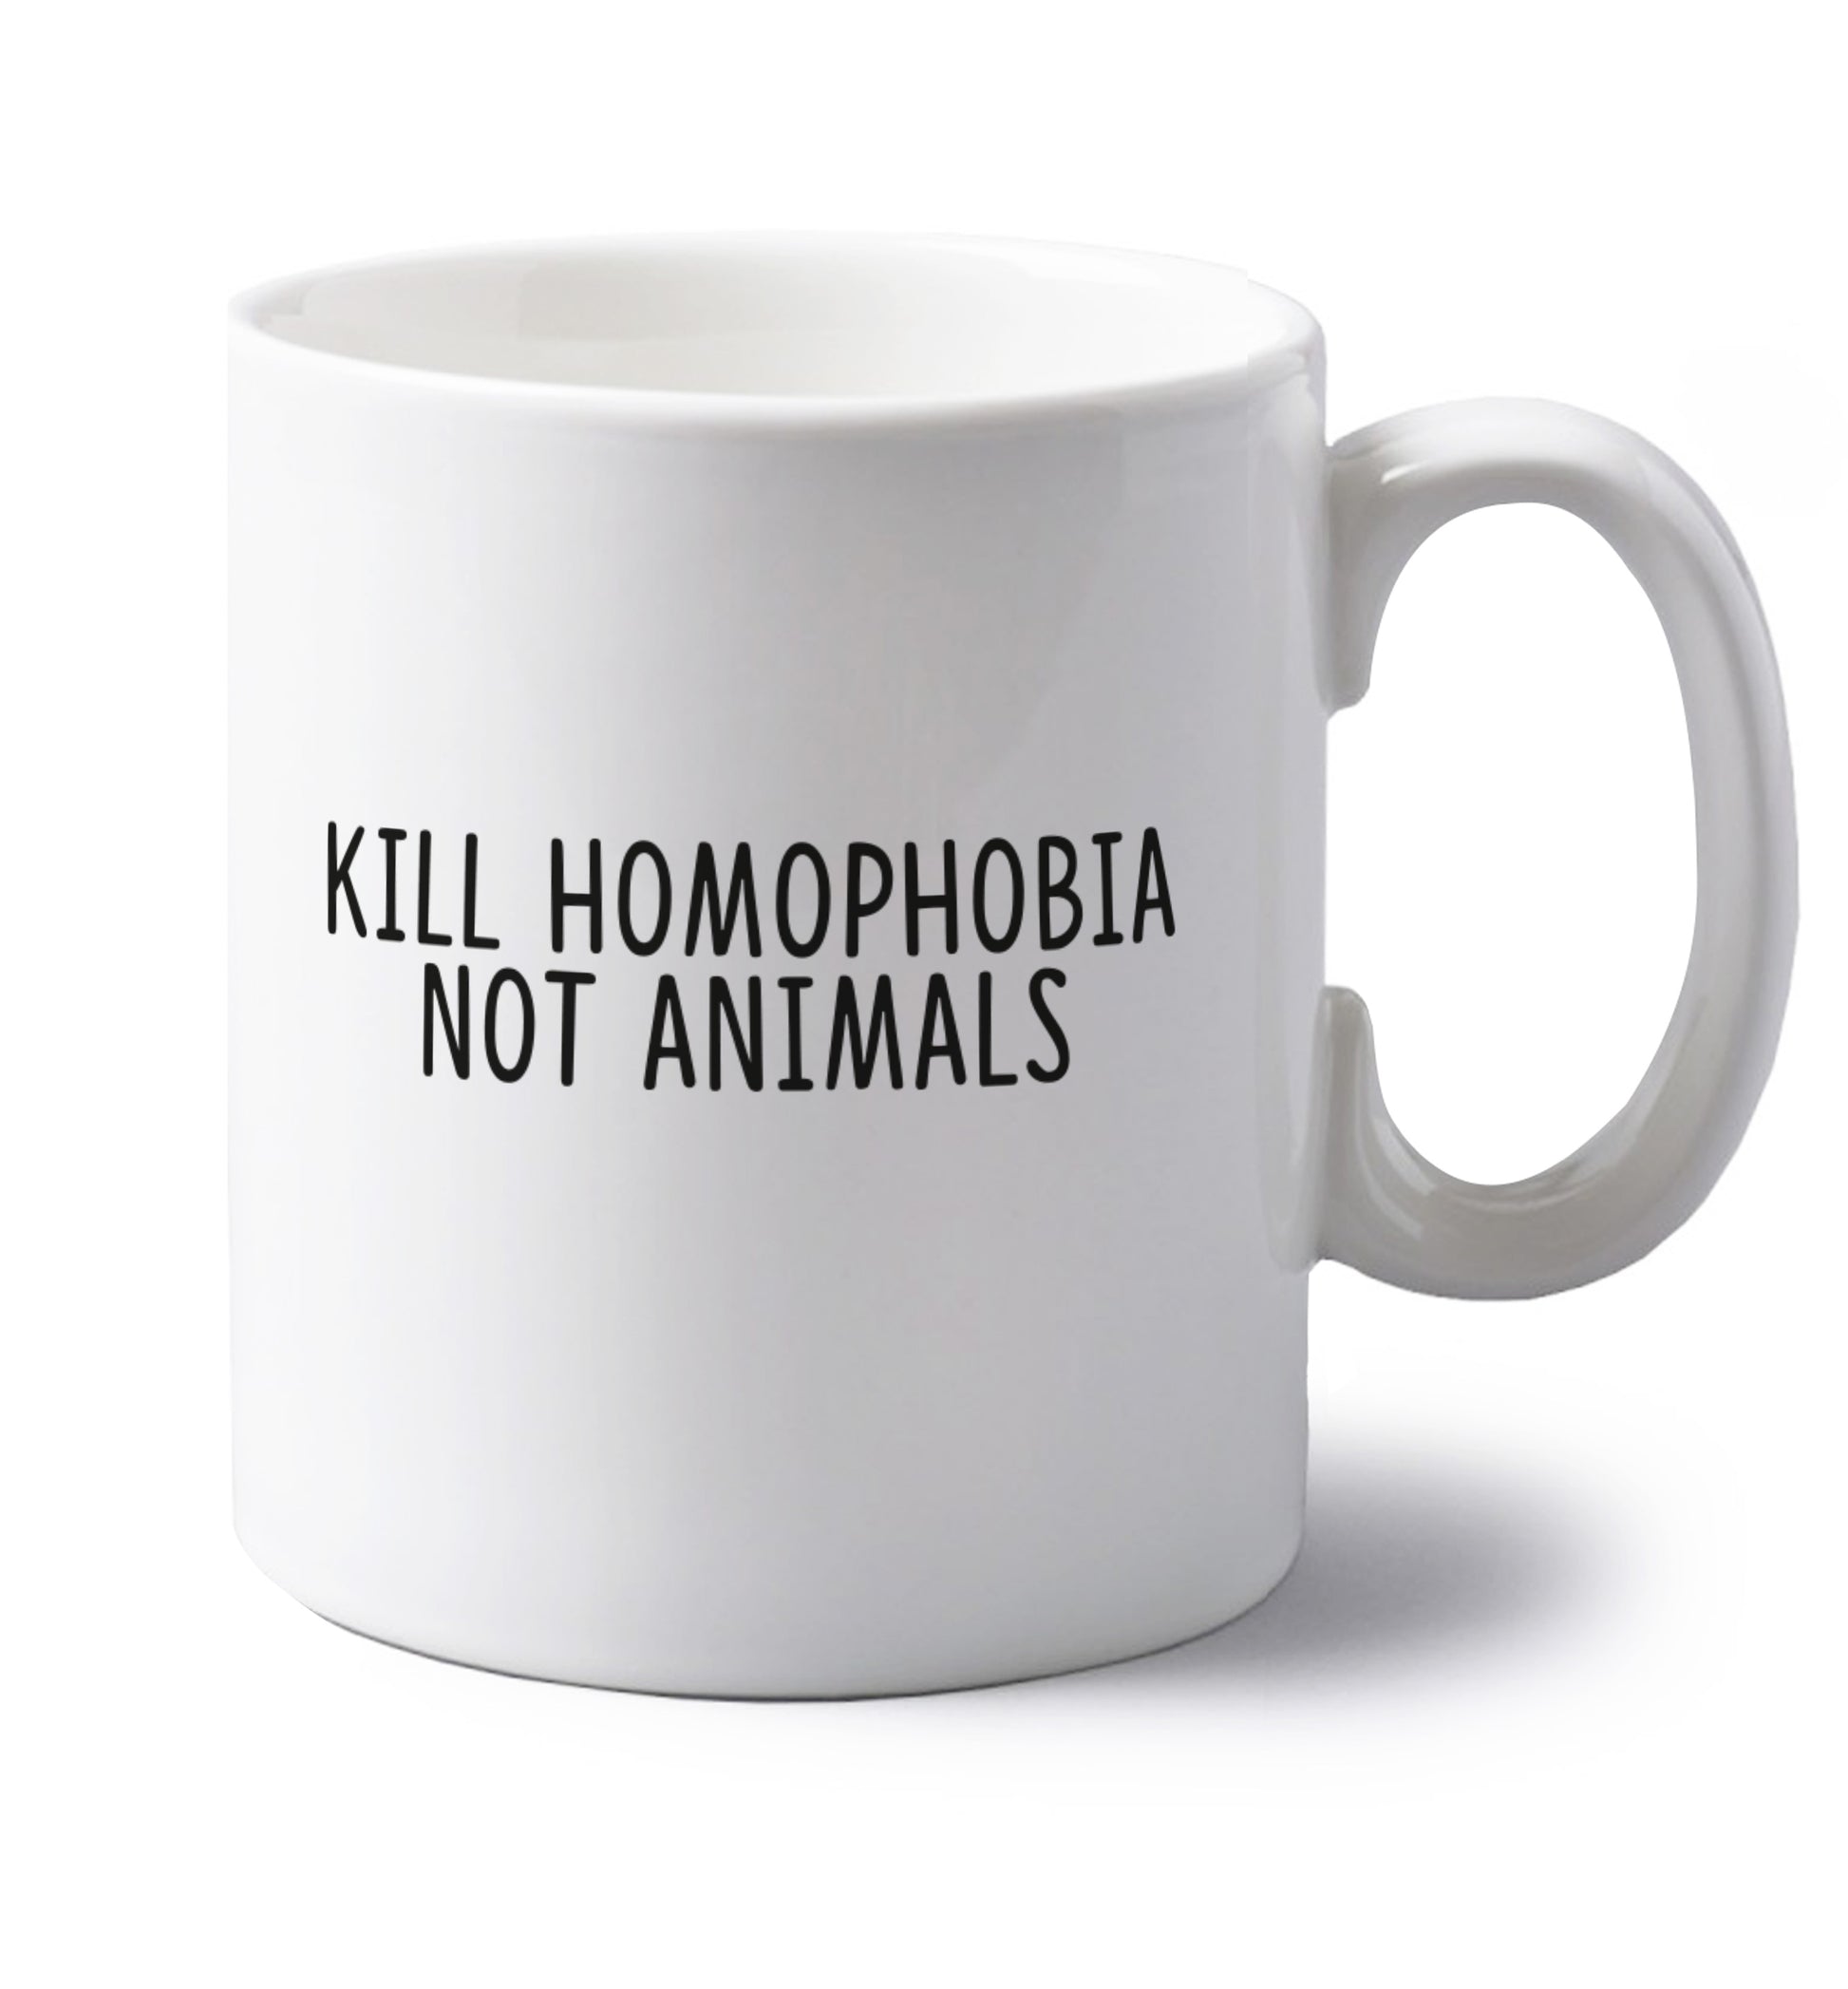 Kill Homophobia Not Animals left handed white ceramic mug 